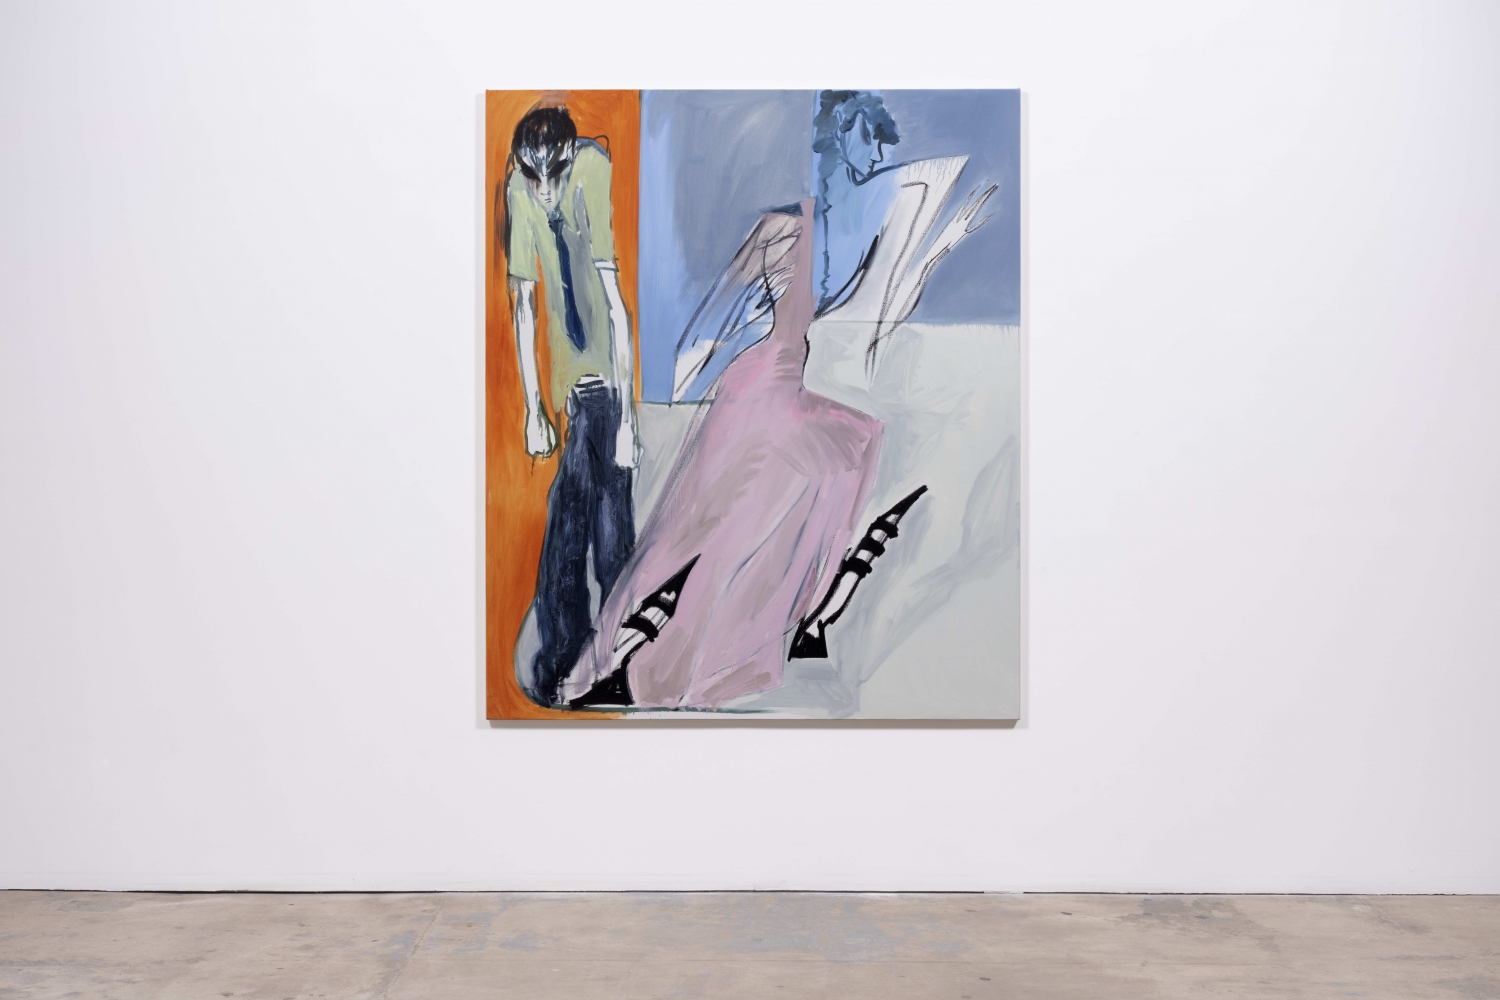 Stefania&amp;nbsp;Batoeva
Untitled, 2021
oil on canvas
78.75 x 67 in
200 x 170.4 cm